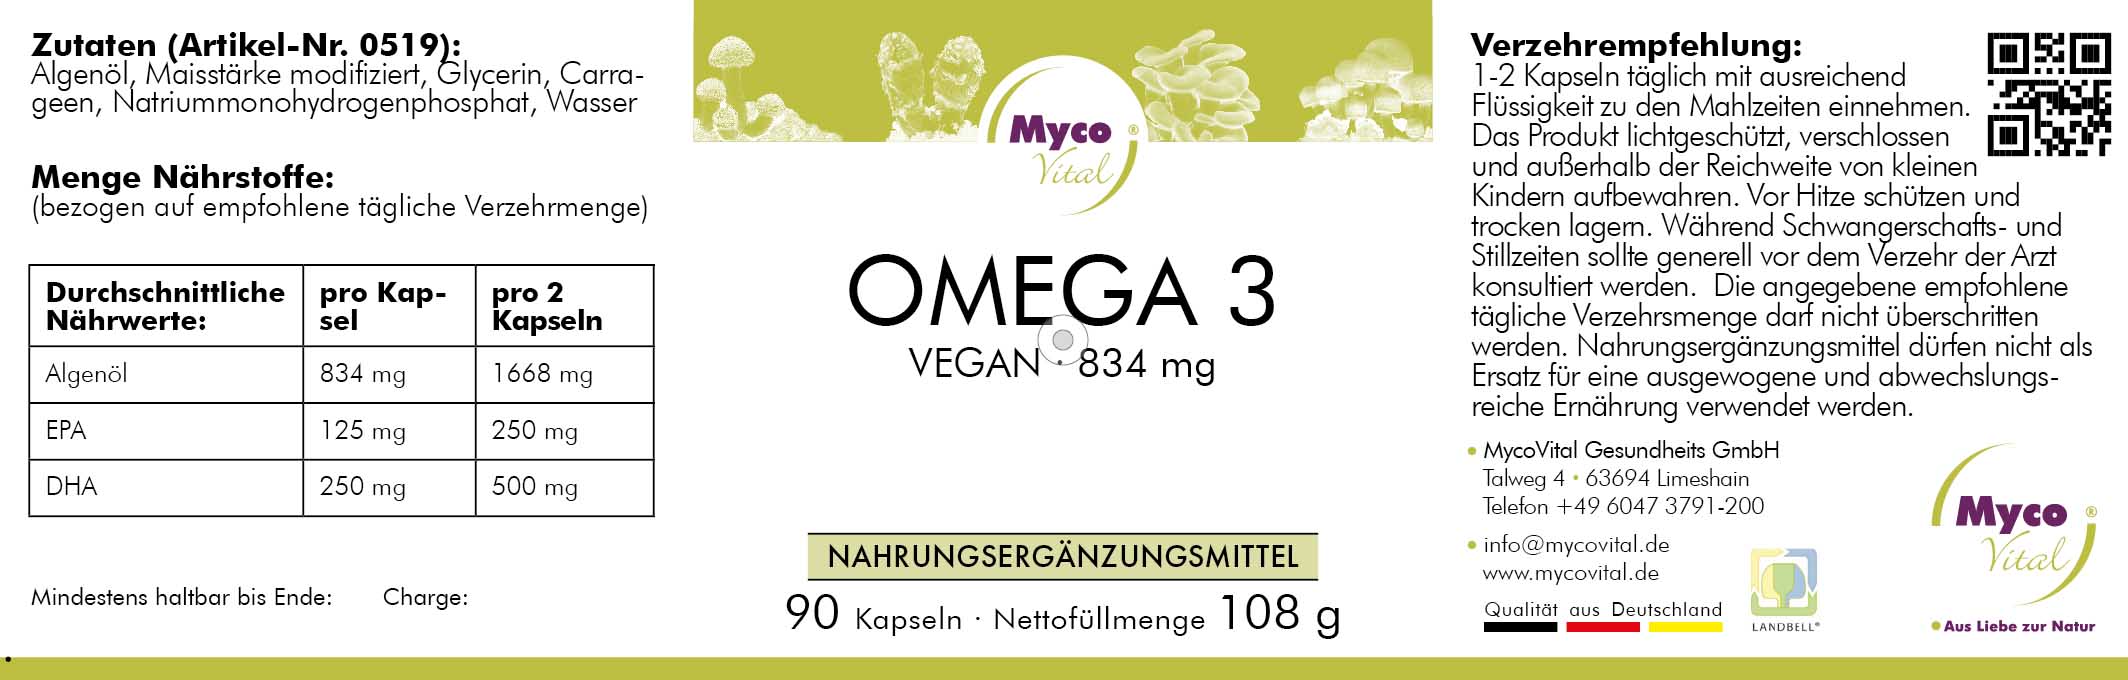 MycoVital Omega 3 VEG Algen 834 mg